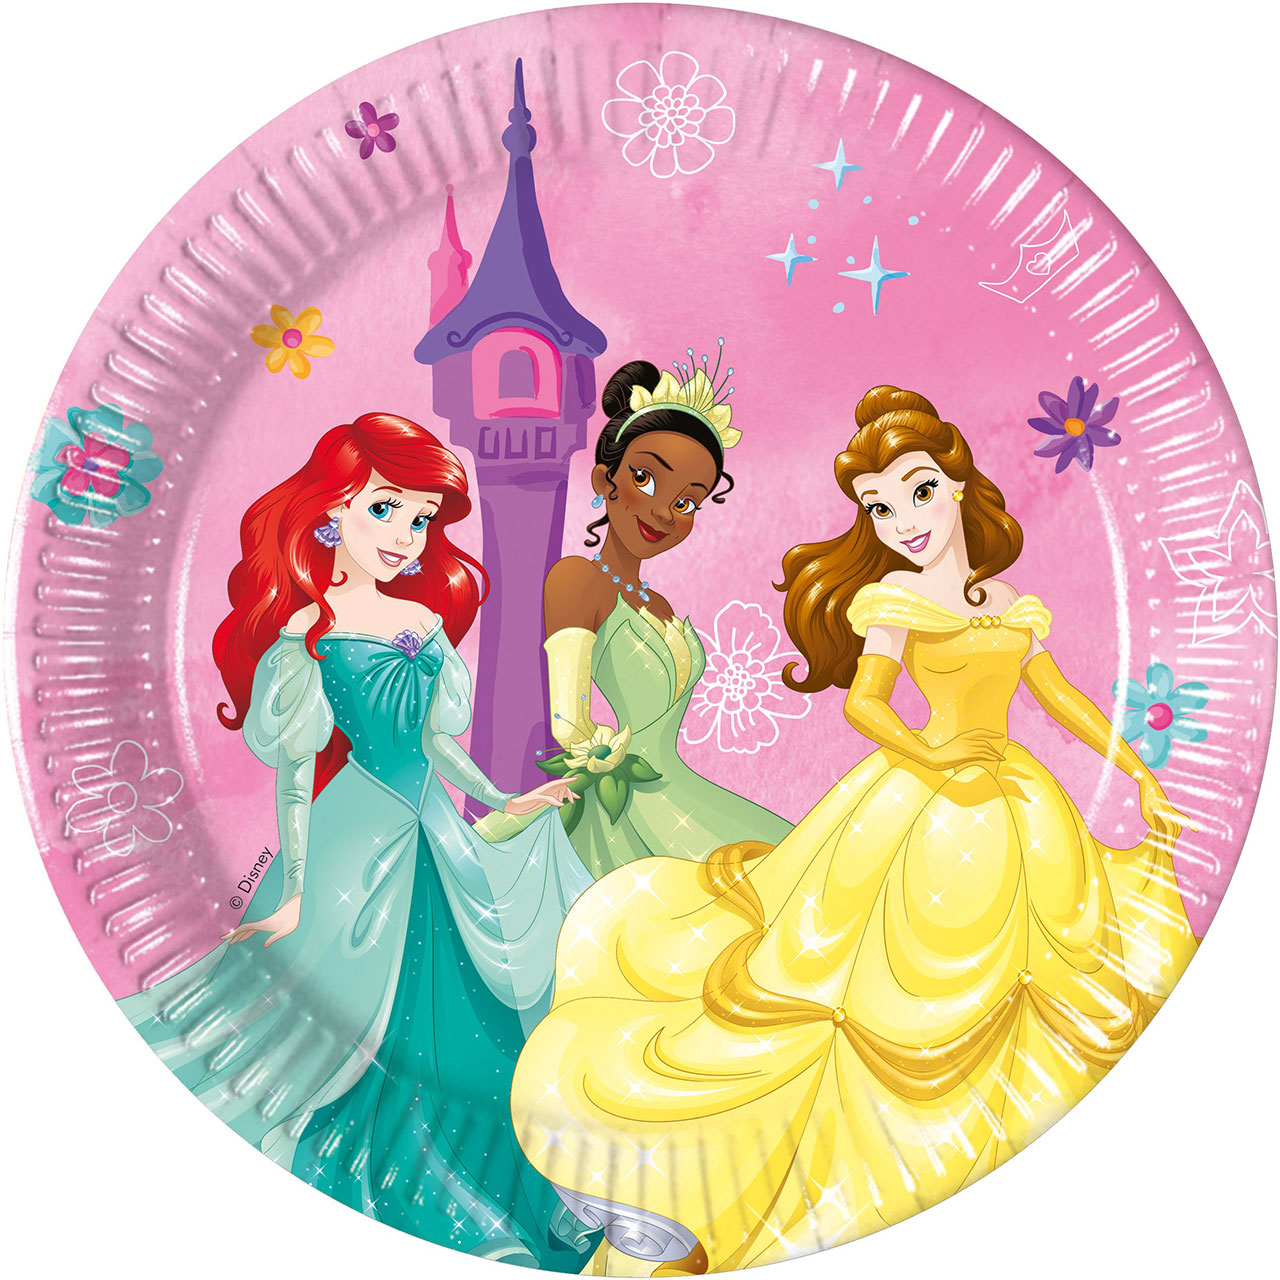 8 Small Disney Princesses Plates